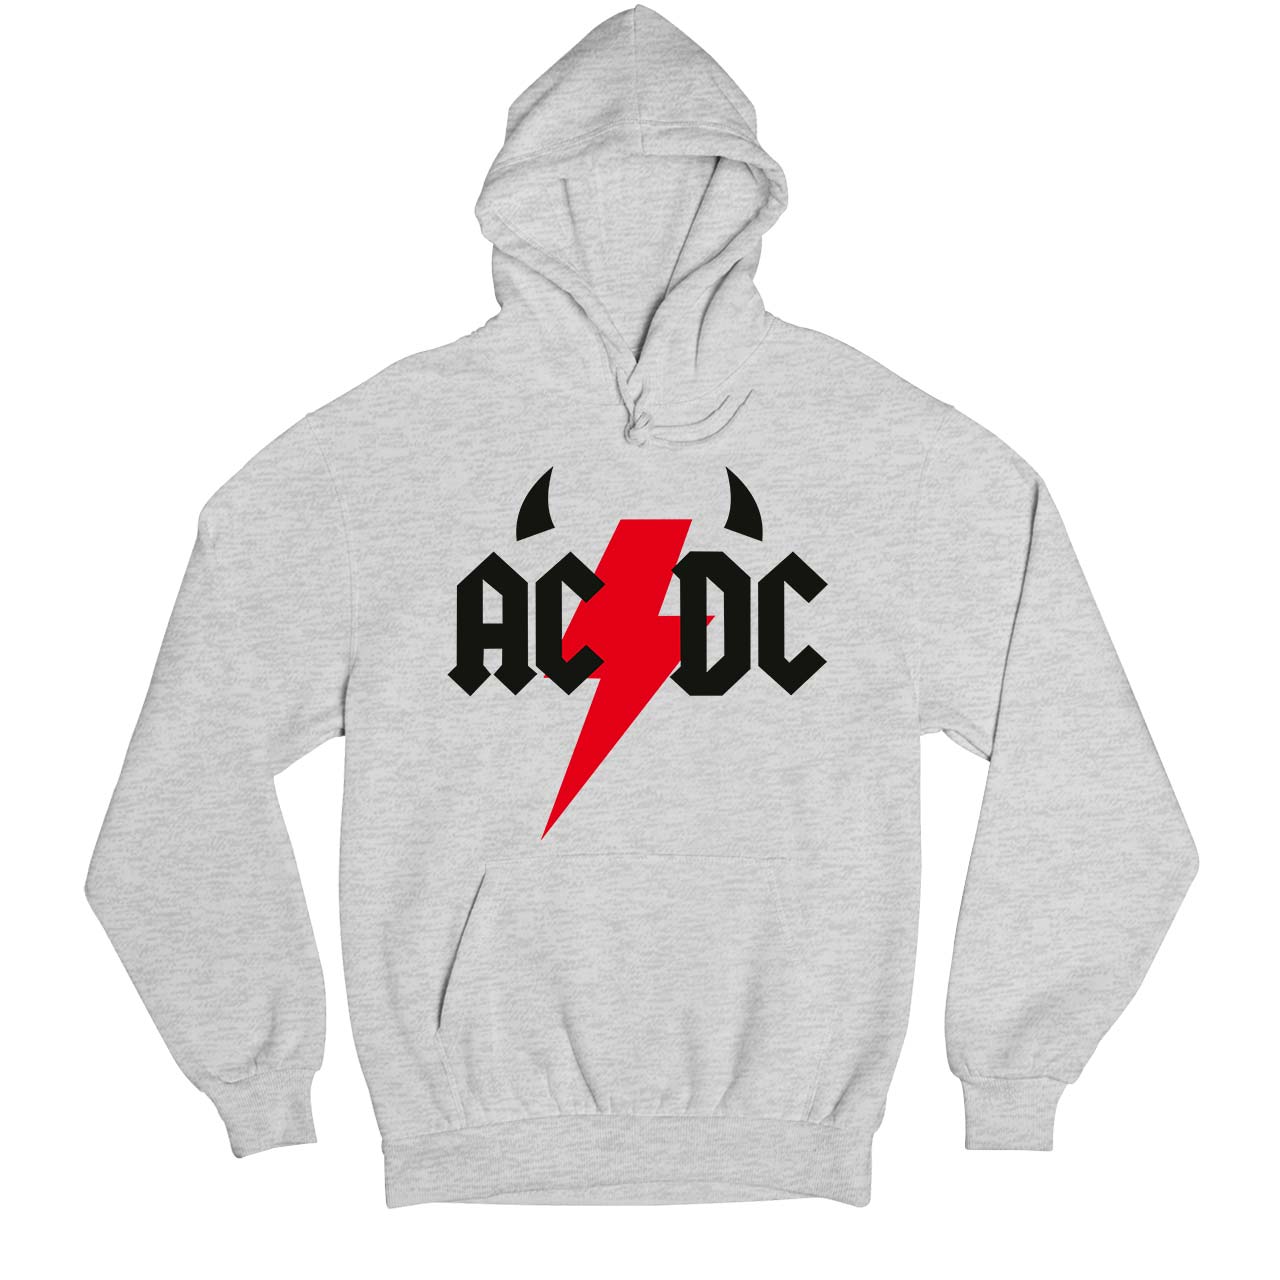 ac/dc rock hoodie hooded sweatshirt winterwear music band buy online india the banyan tee tbt men women girls boys unisex gray